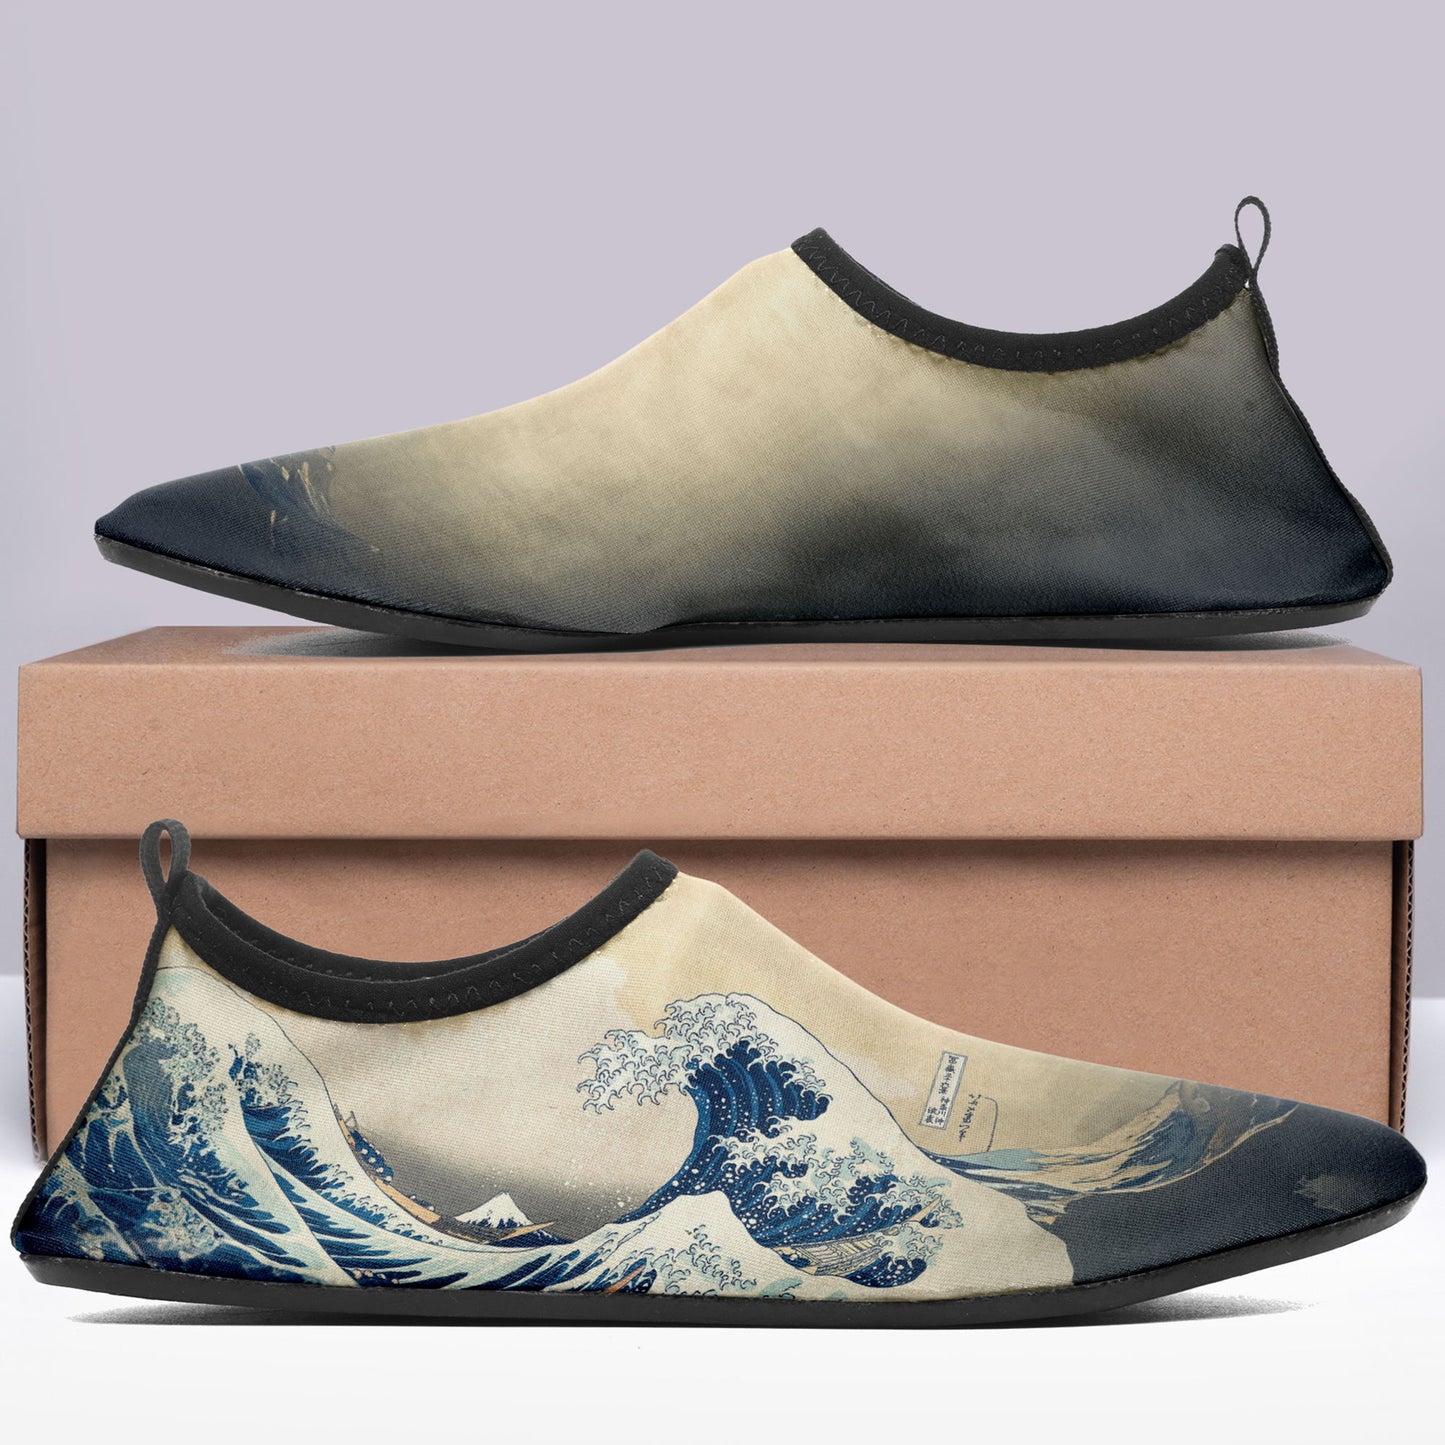 customized printed aqua shoes 1902 ukiyo-e katsushika hokusai's the great wave off kanagawa beach wading shoes 7